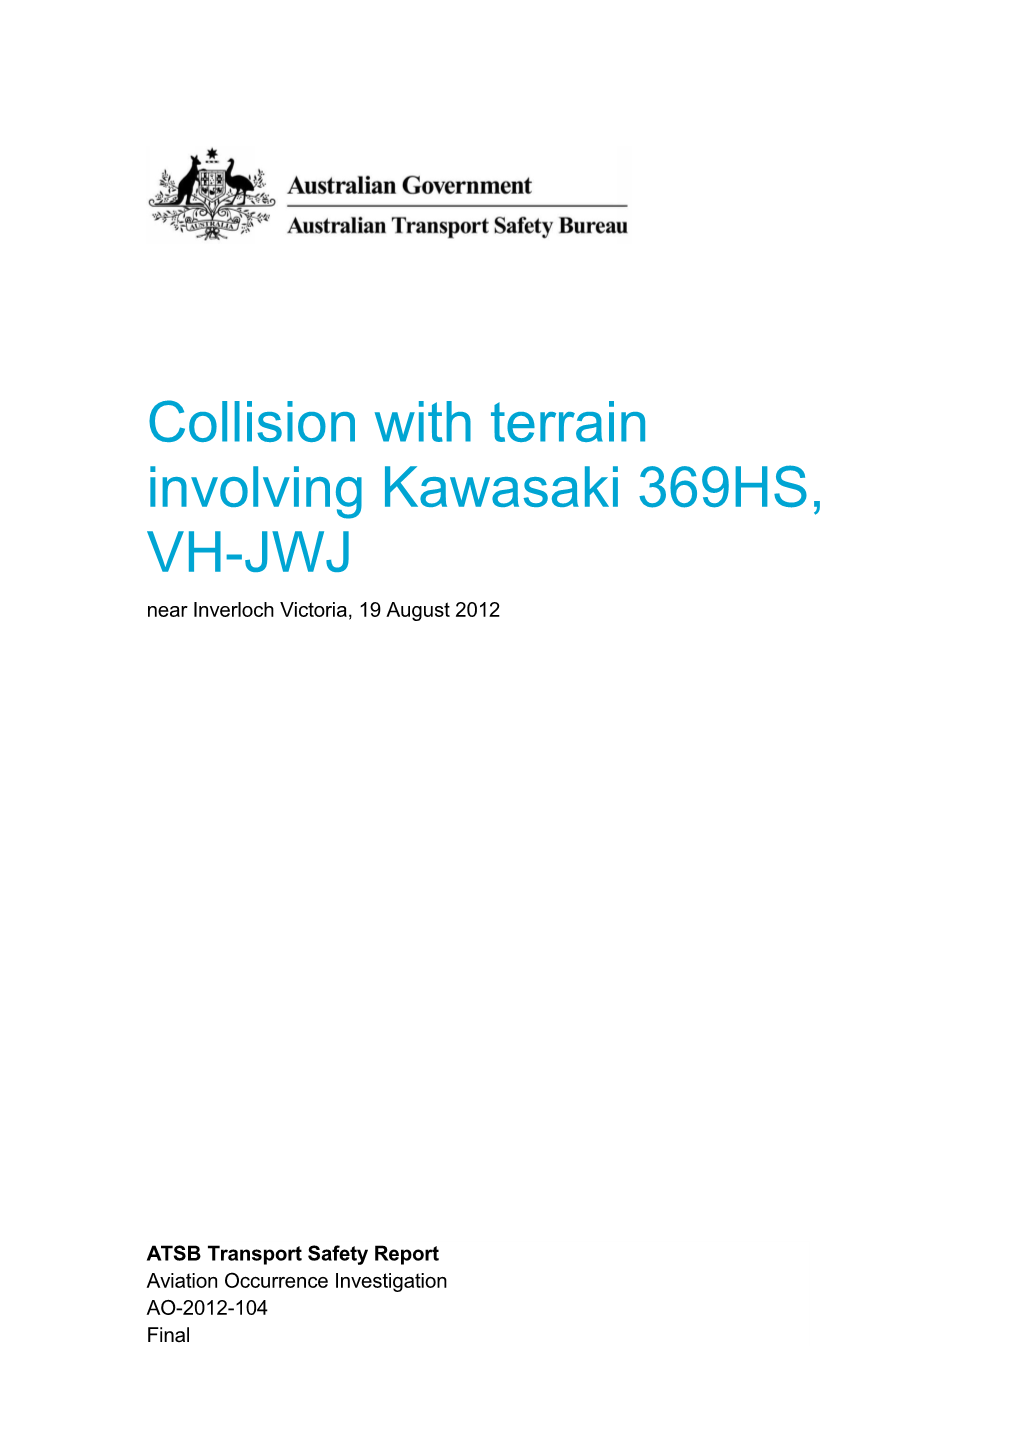 Collision with Terrain Involving Kawasaki 369HS, VH-JWJ